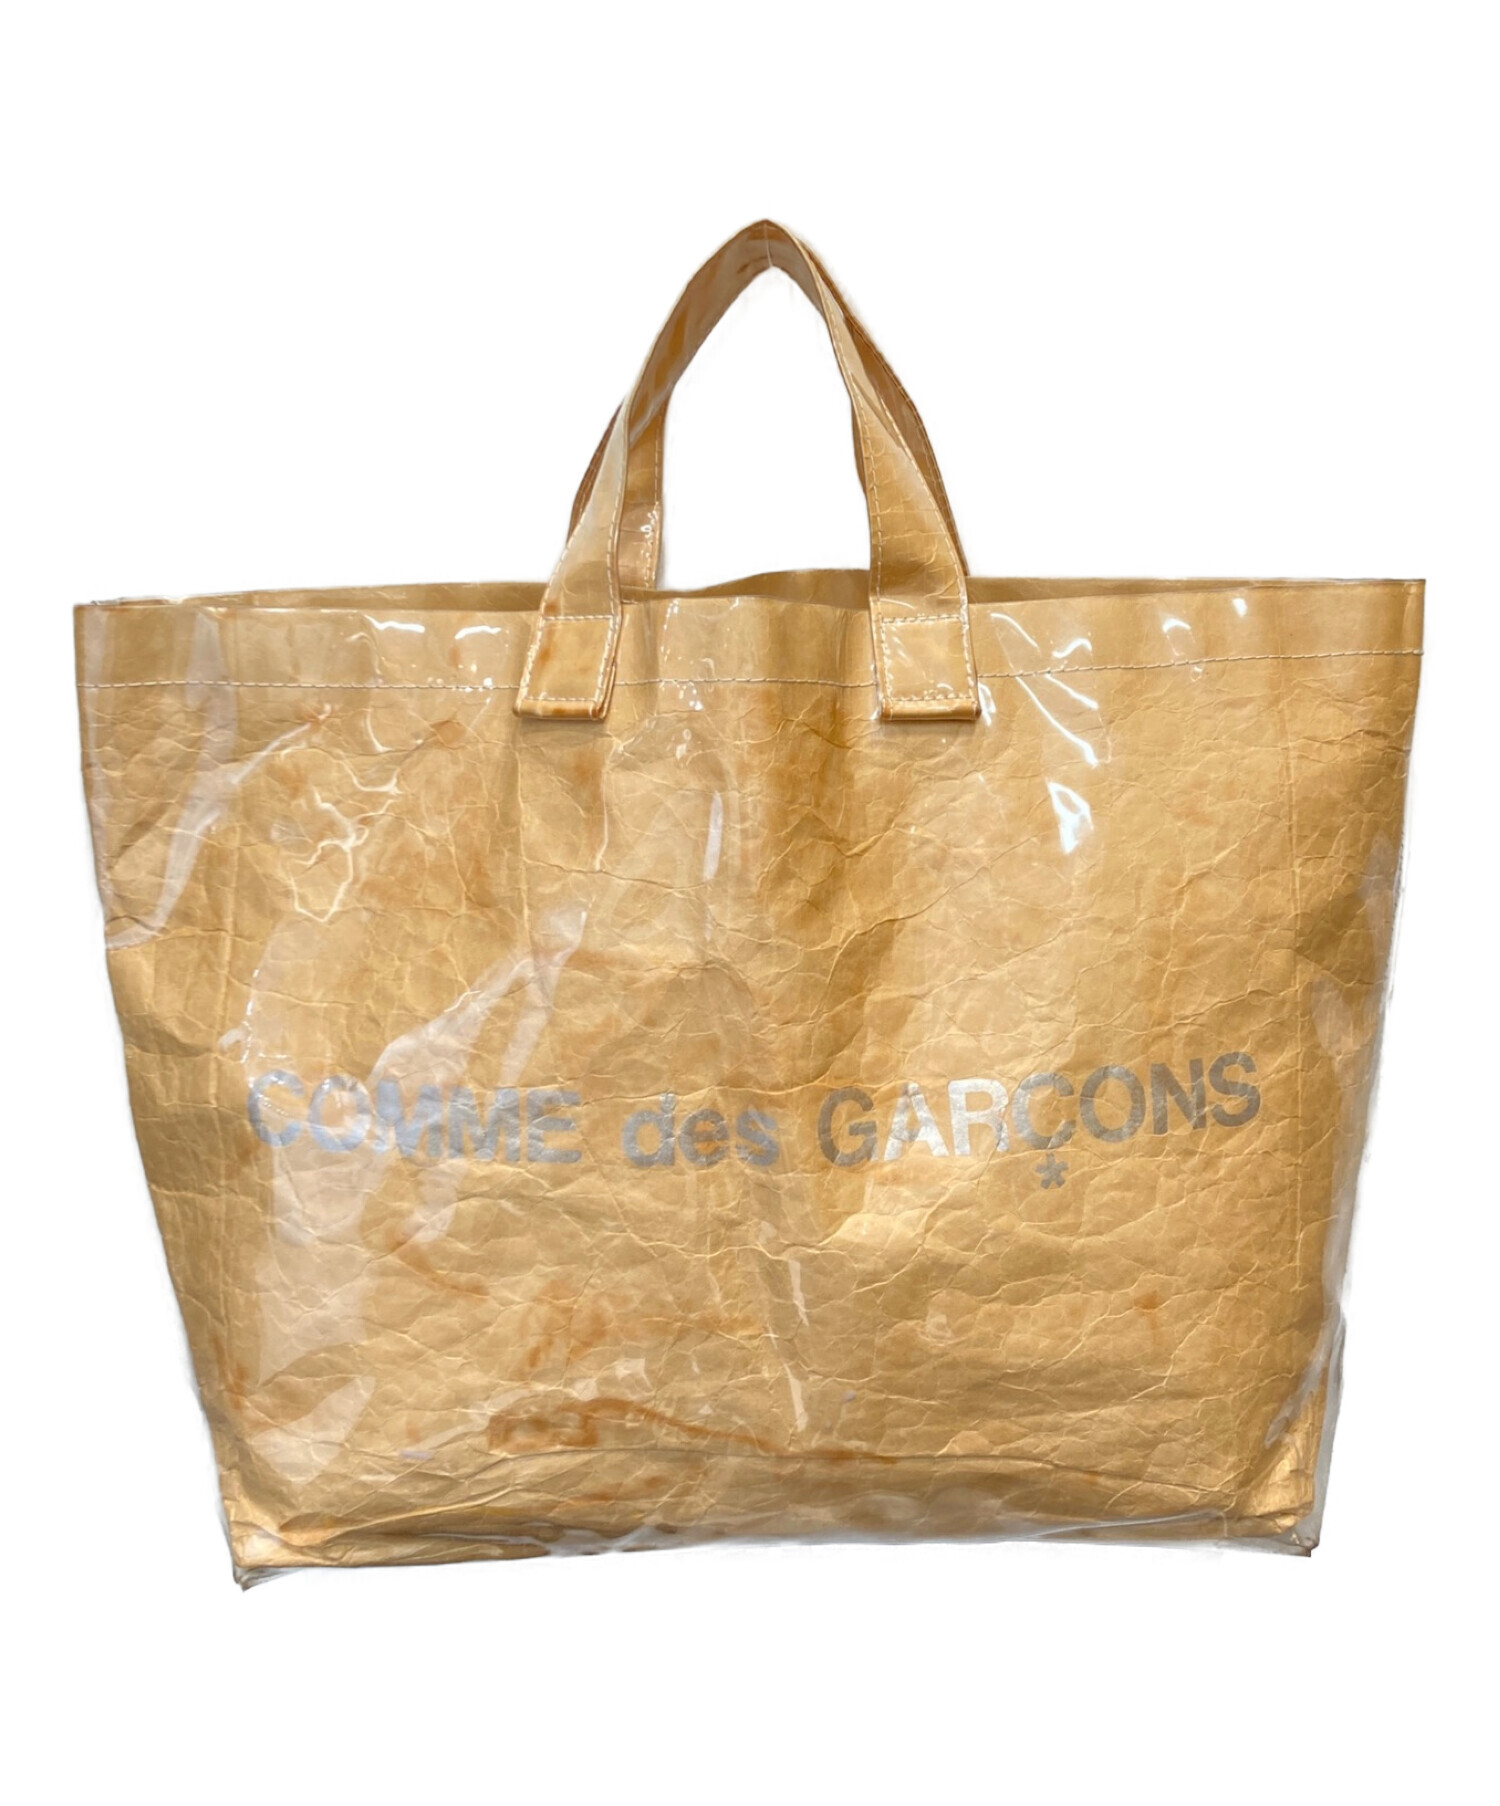 COMME des GARCONS (コムデギャルソン) PVCトートバッグ サイズ:表記なし